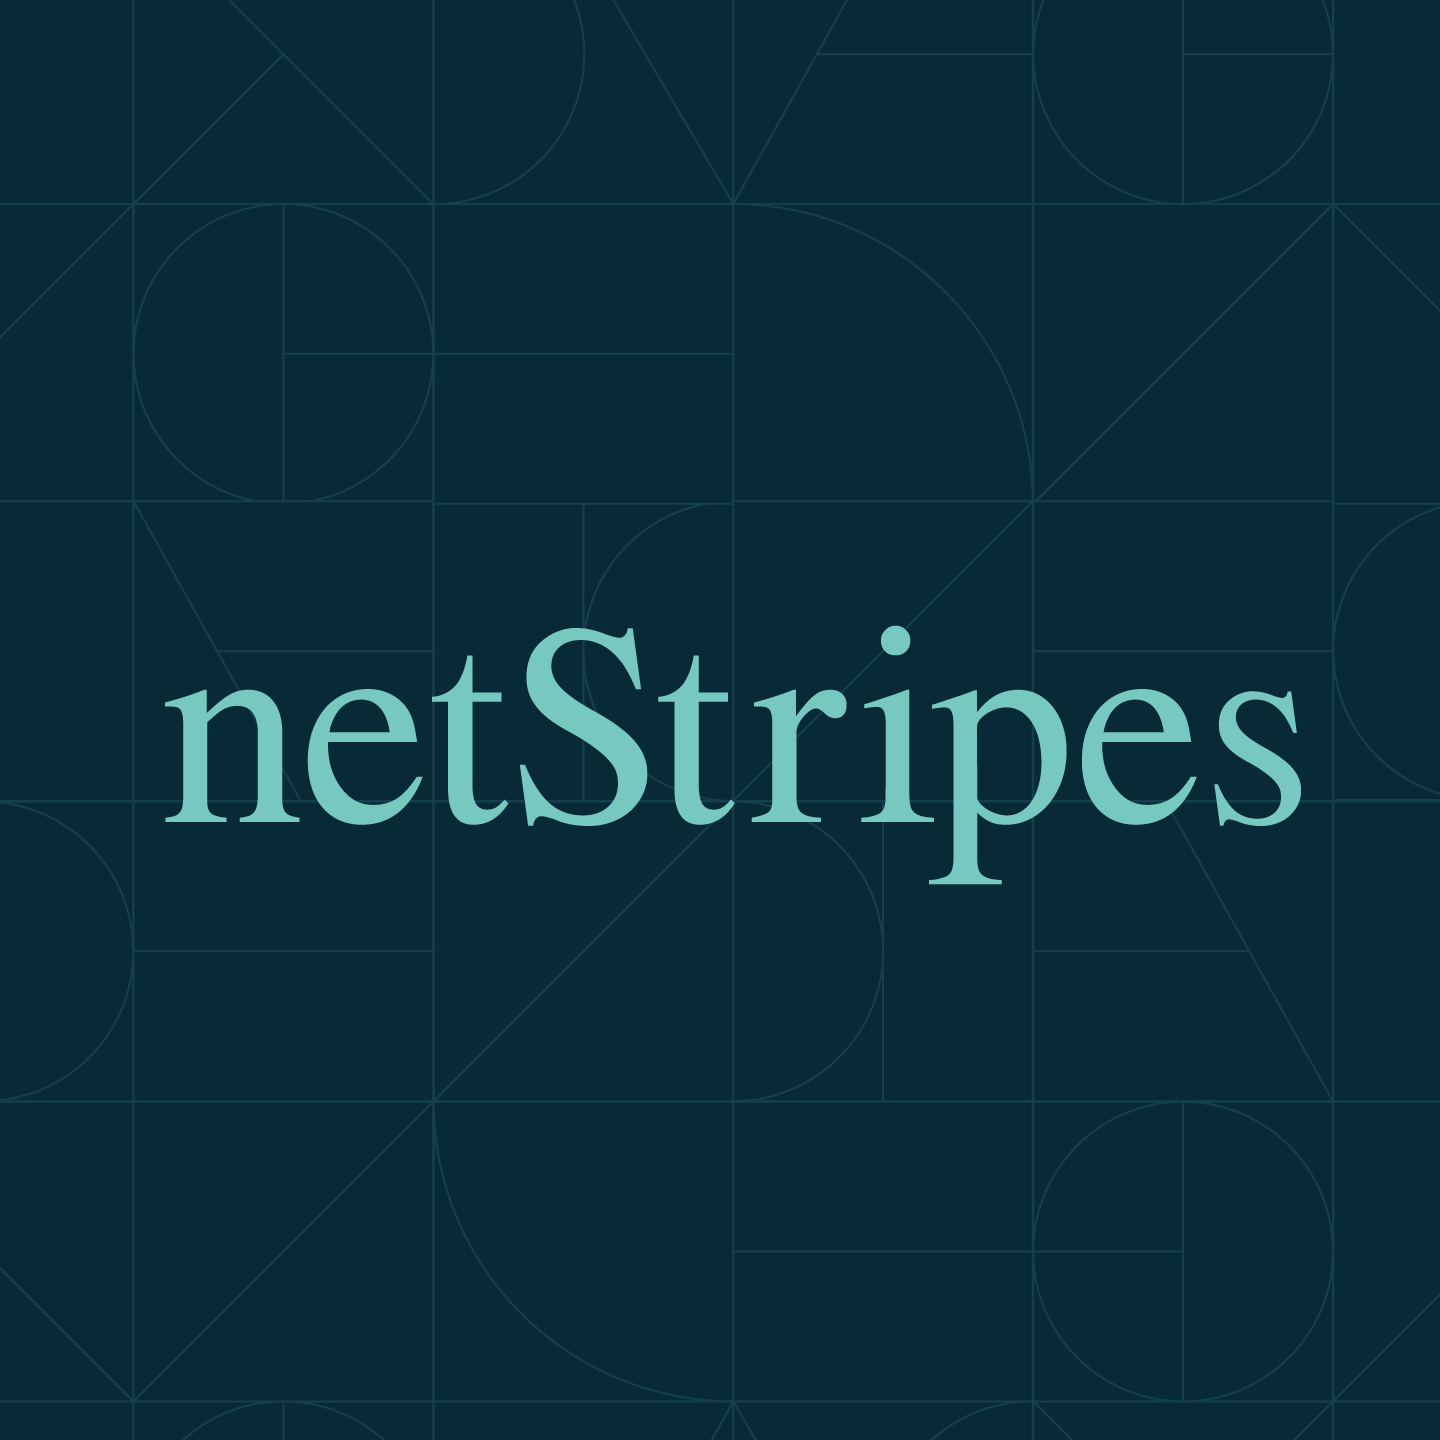 NetStripes